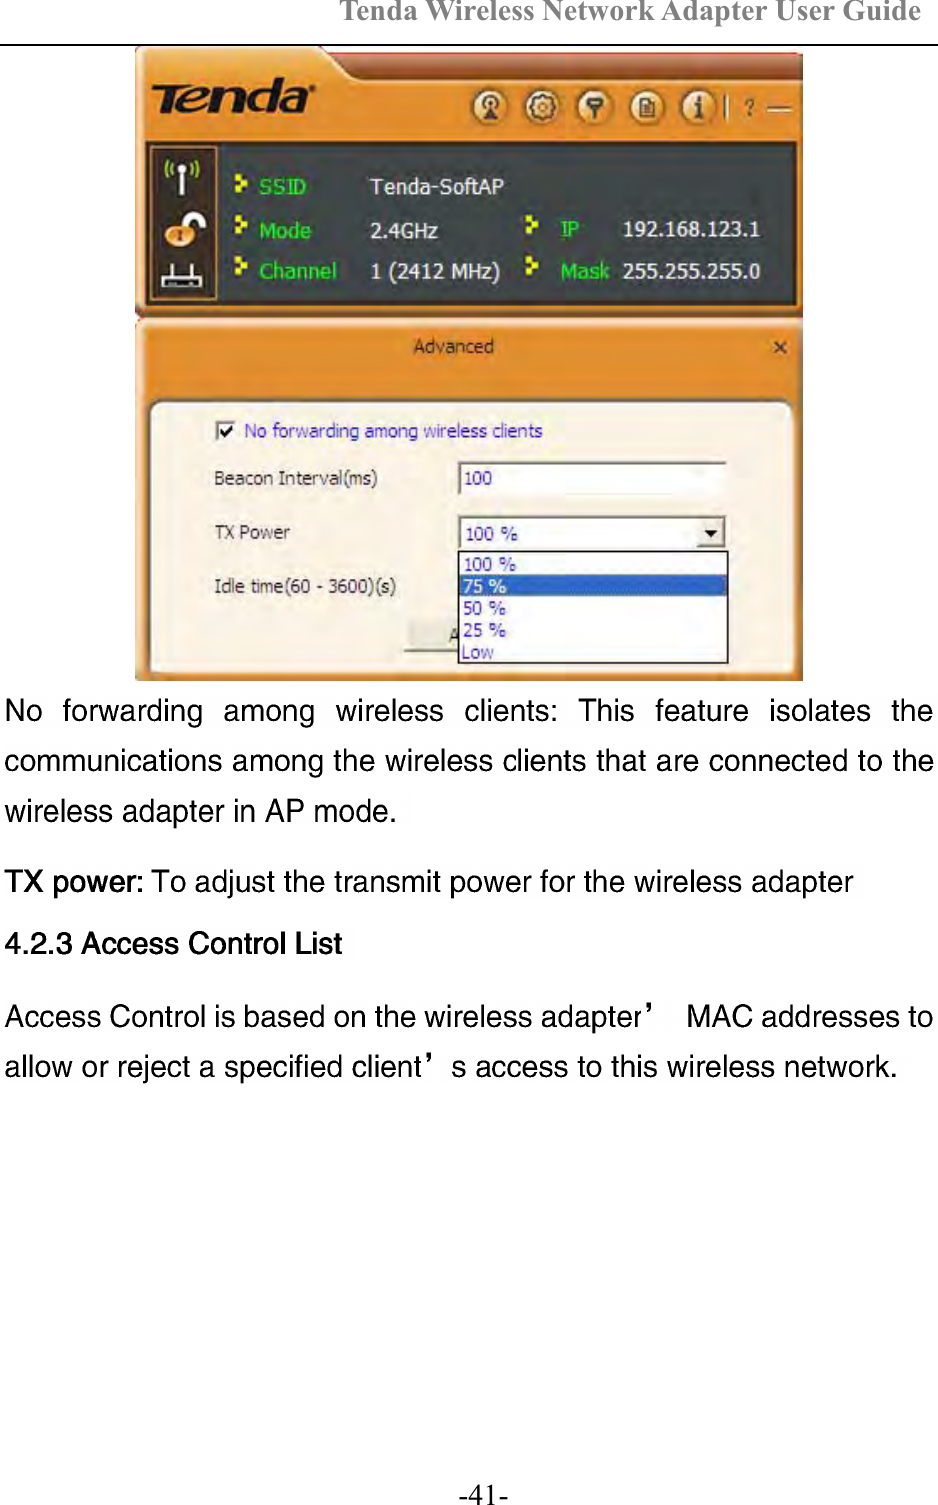 Tenda Wireless Network Adapter User Guide  -41- 